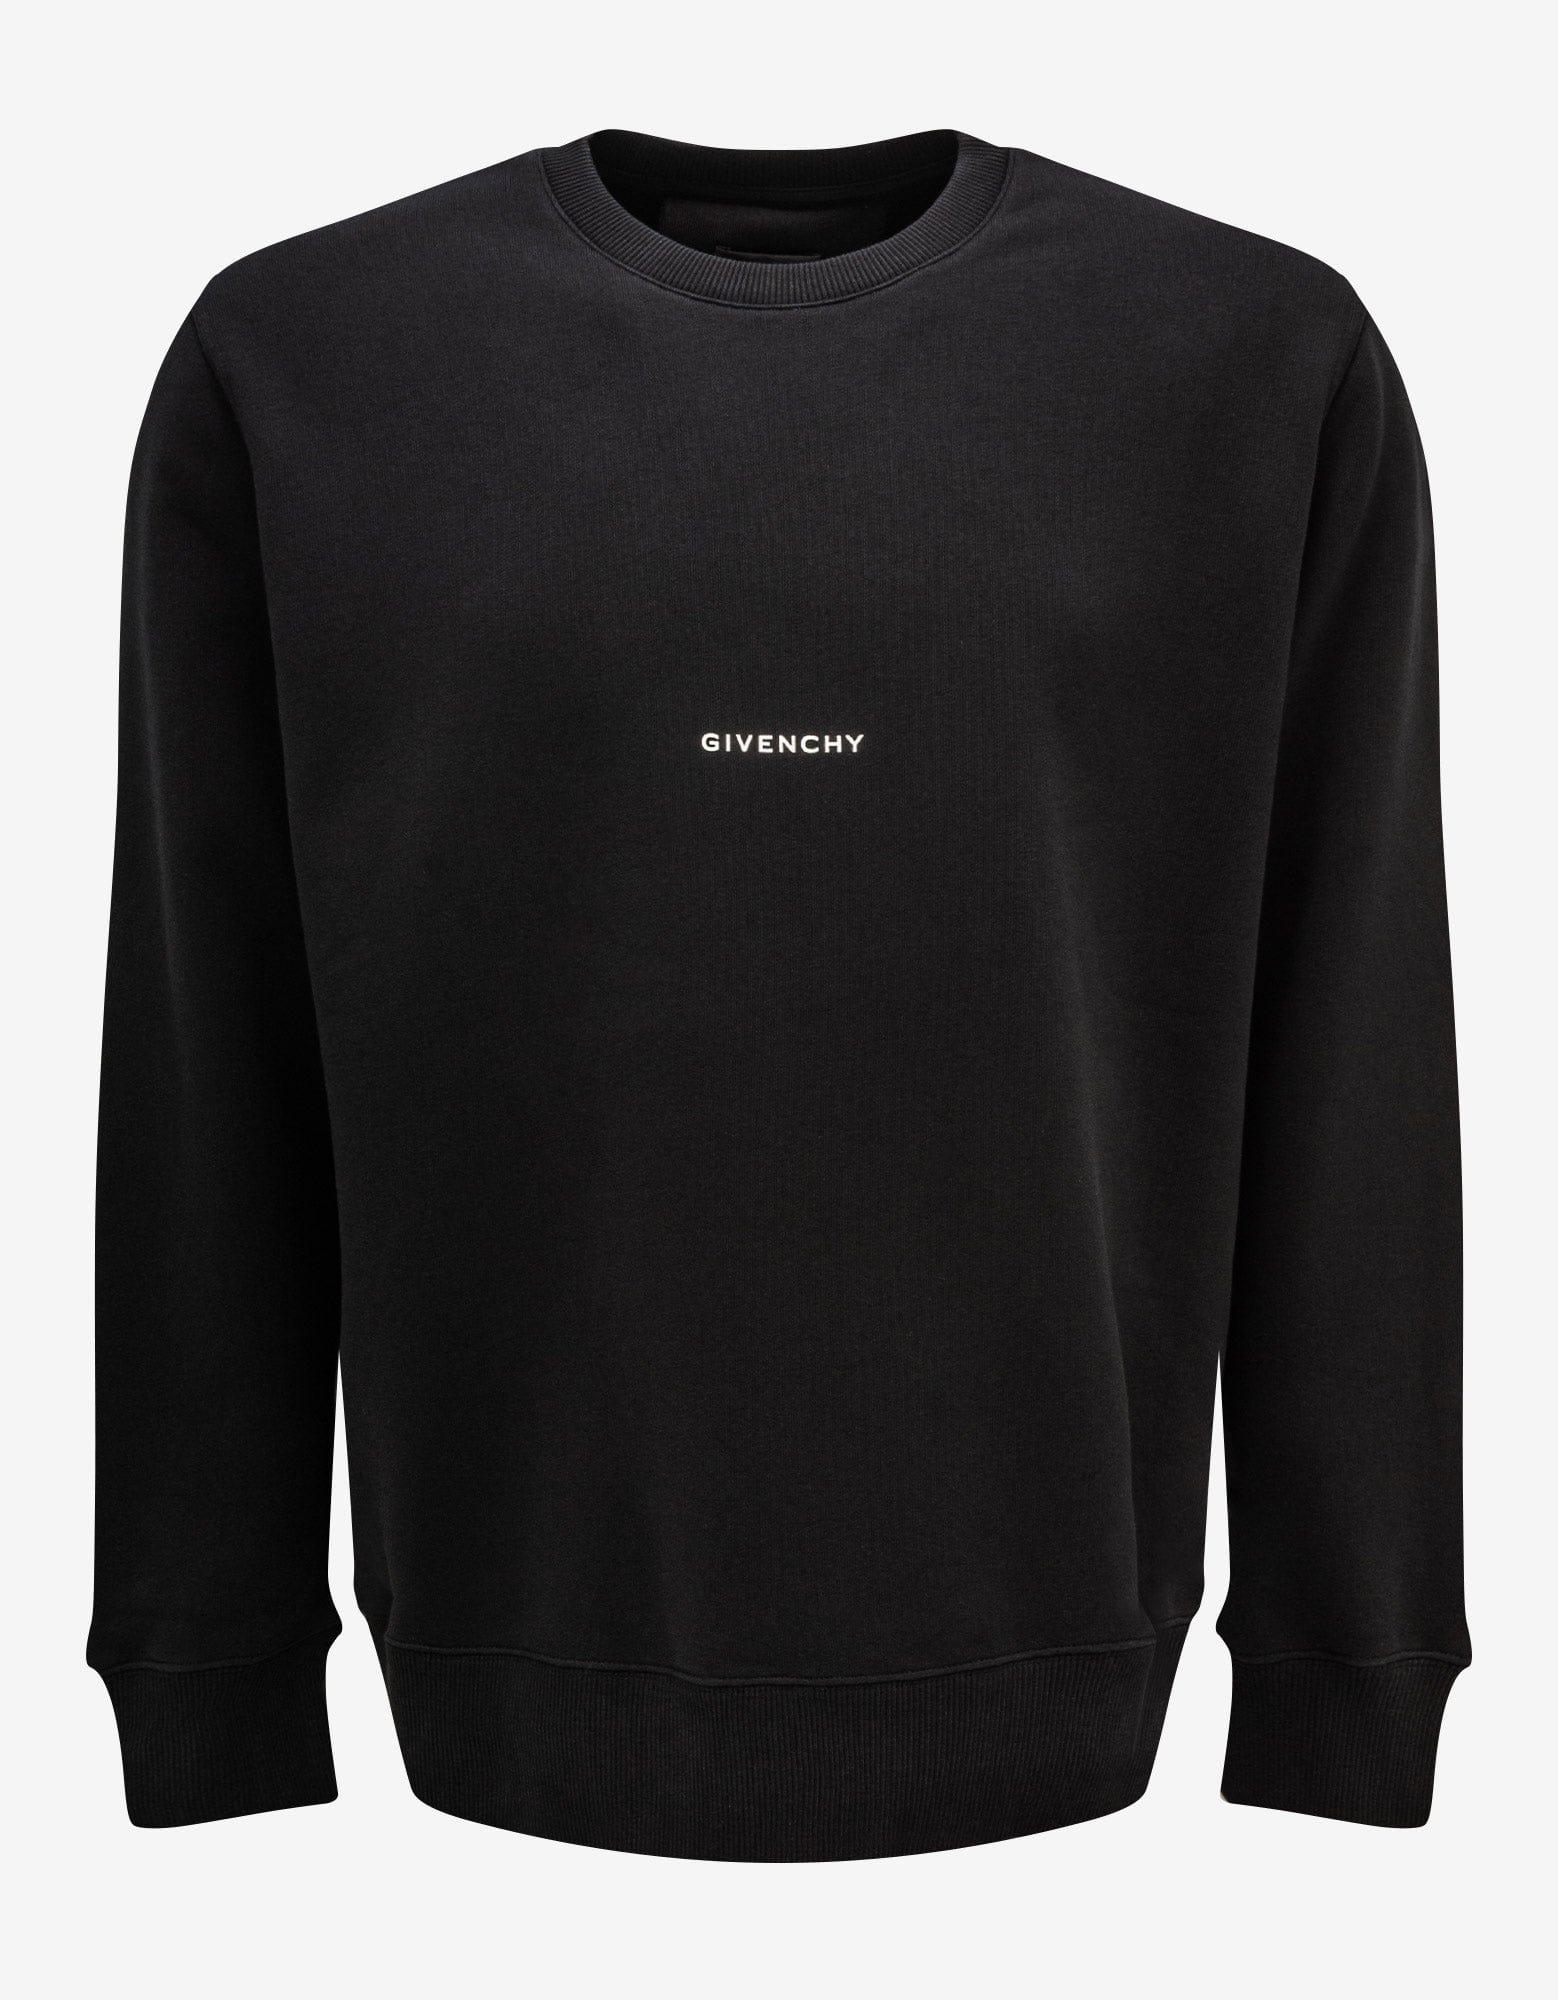 Givenchy Black Cross Logo Sweatshirt for Men Lyst